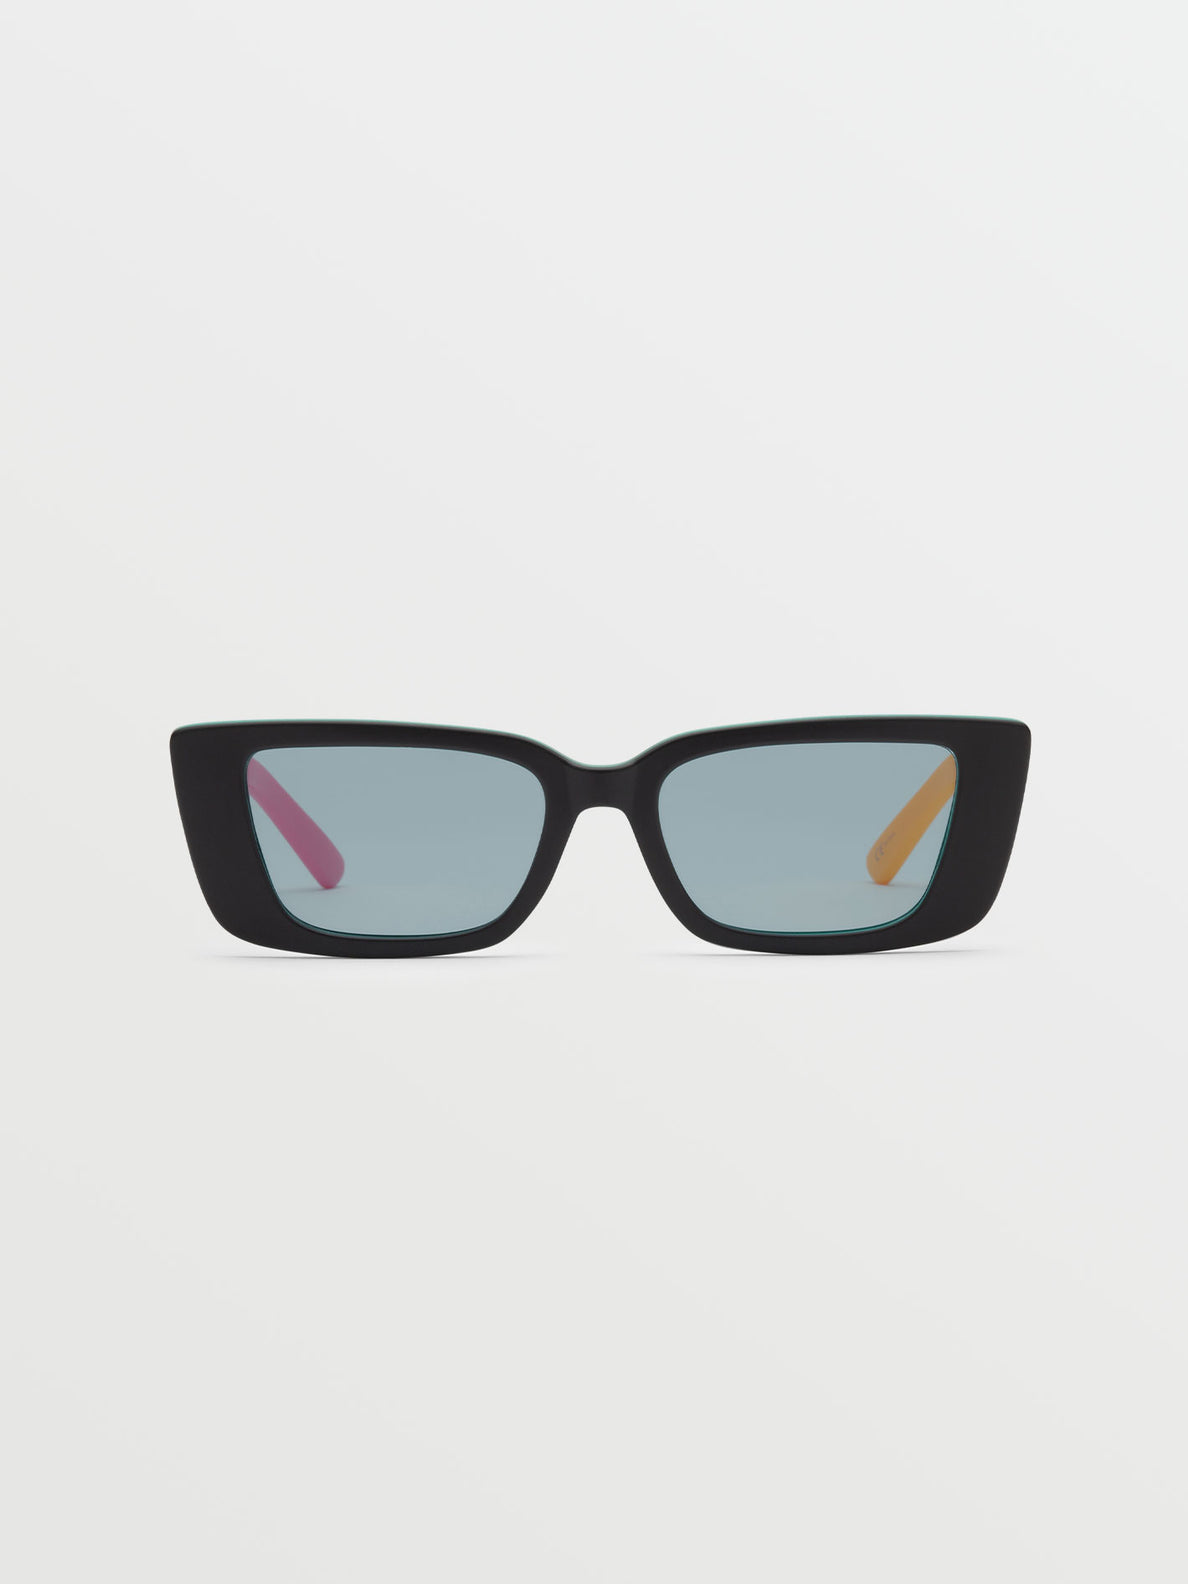 Strange Land Sunglasses - Volcom Ent/Teal (VE04005531_VCO) [F]